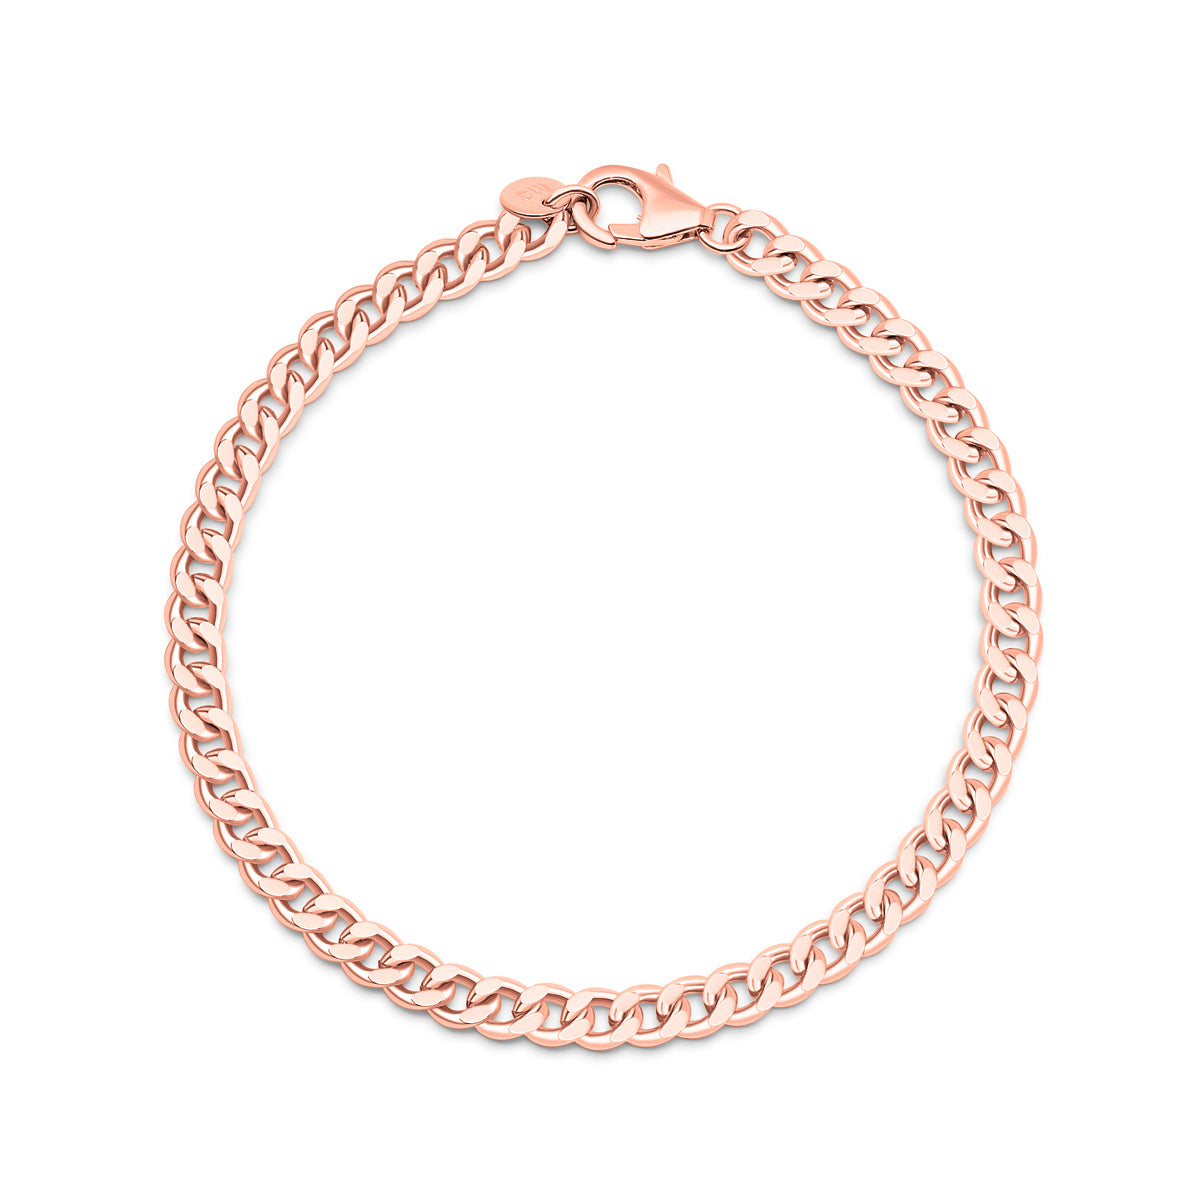 Rose gold plated chain link bracelet